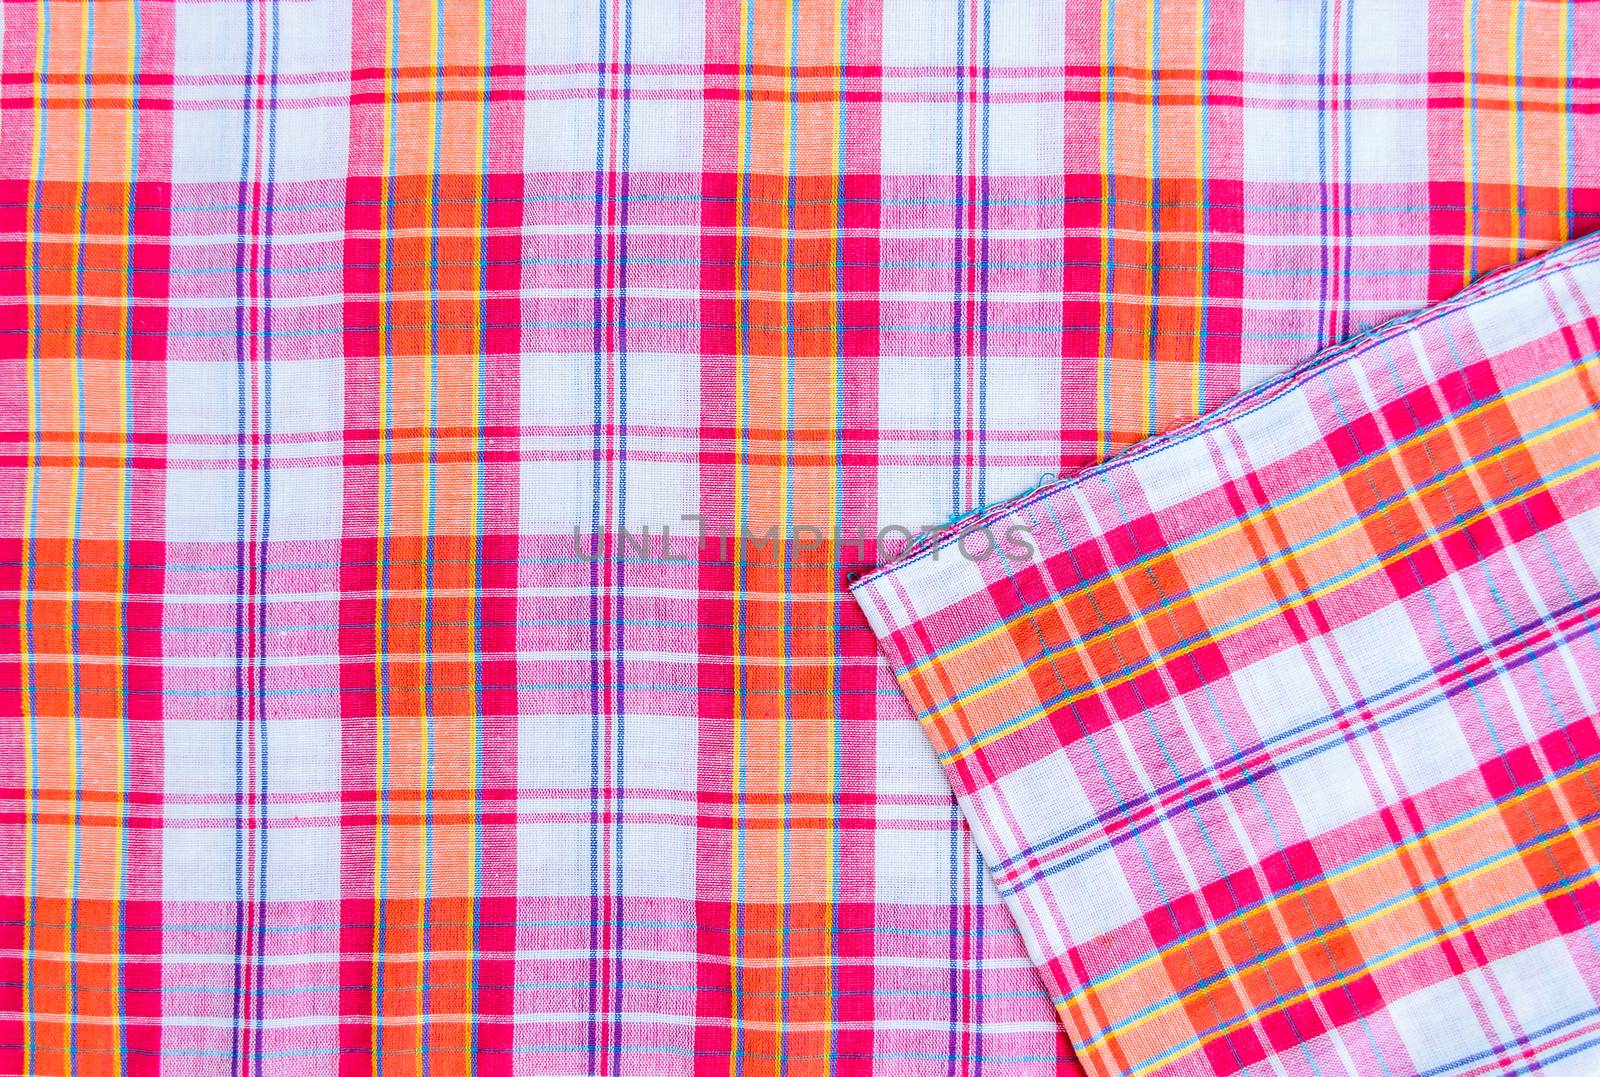 Colorful loincloth fabric by naramit